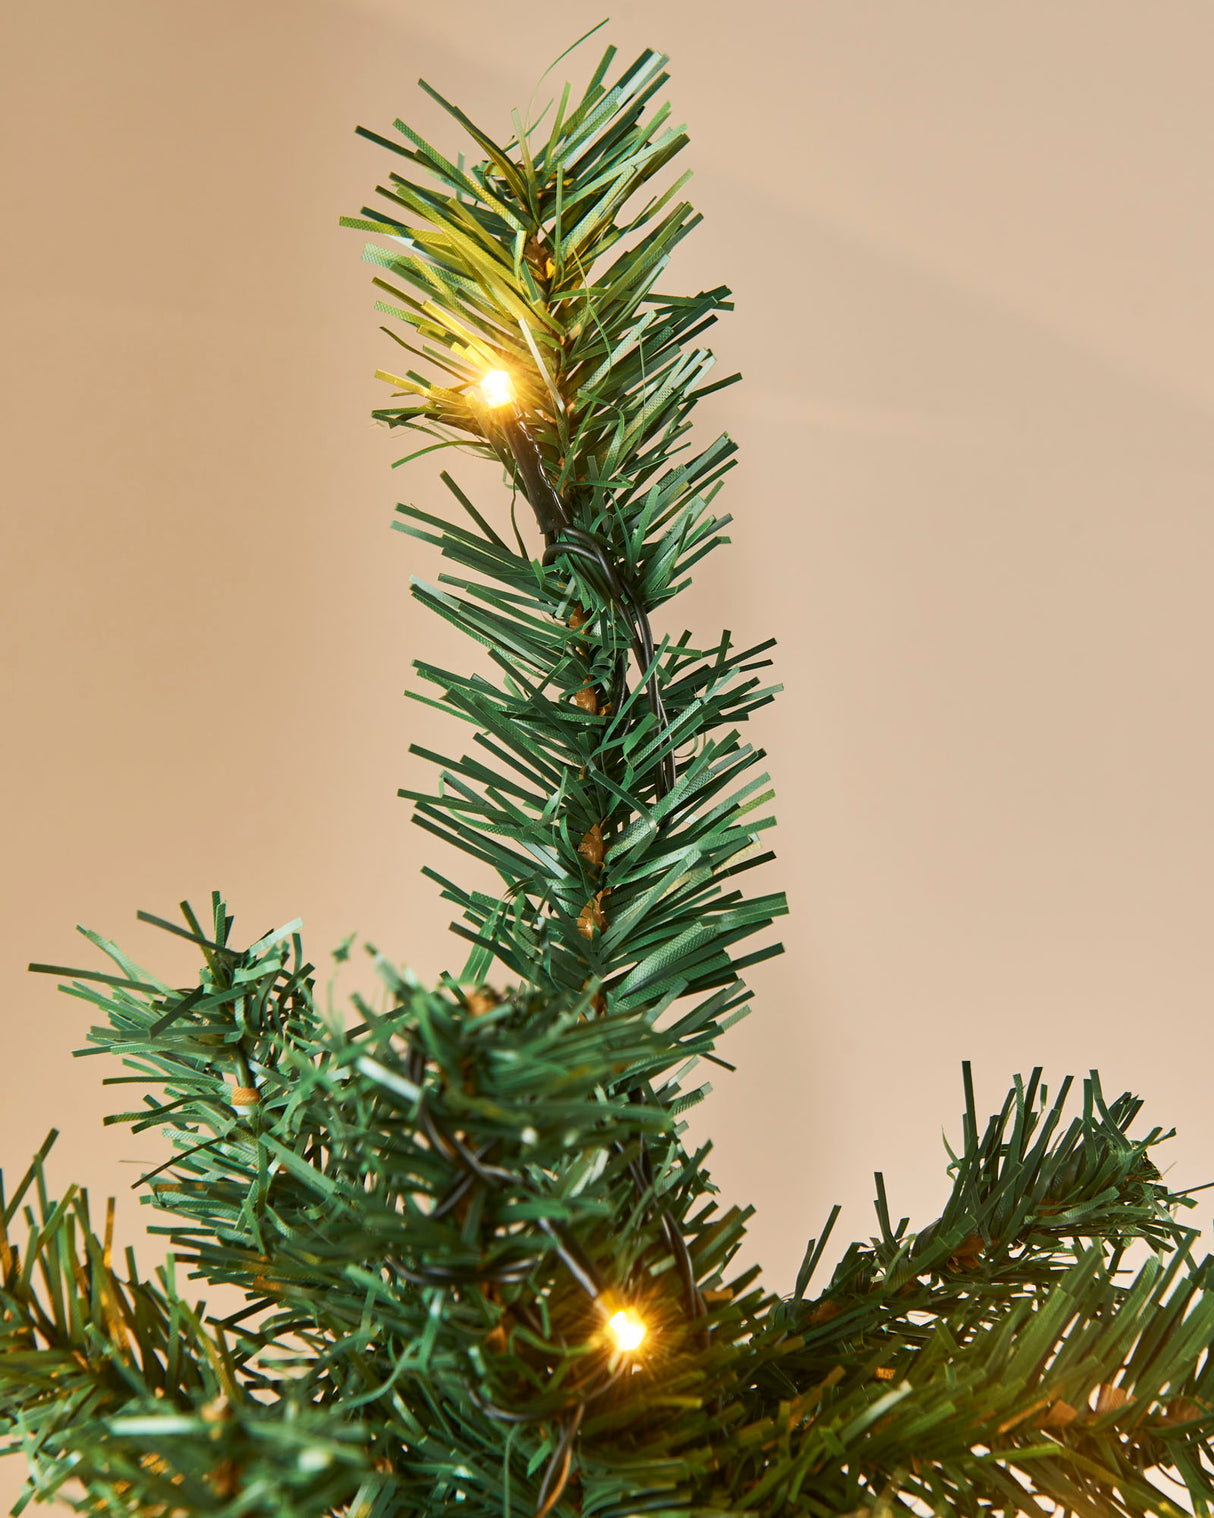 Pre-Lit Highland Pop-Up Christmas Tree